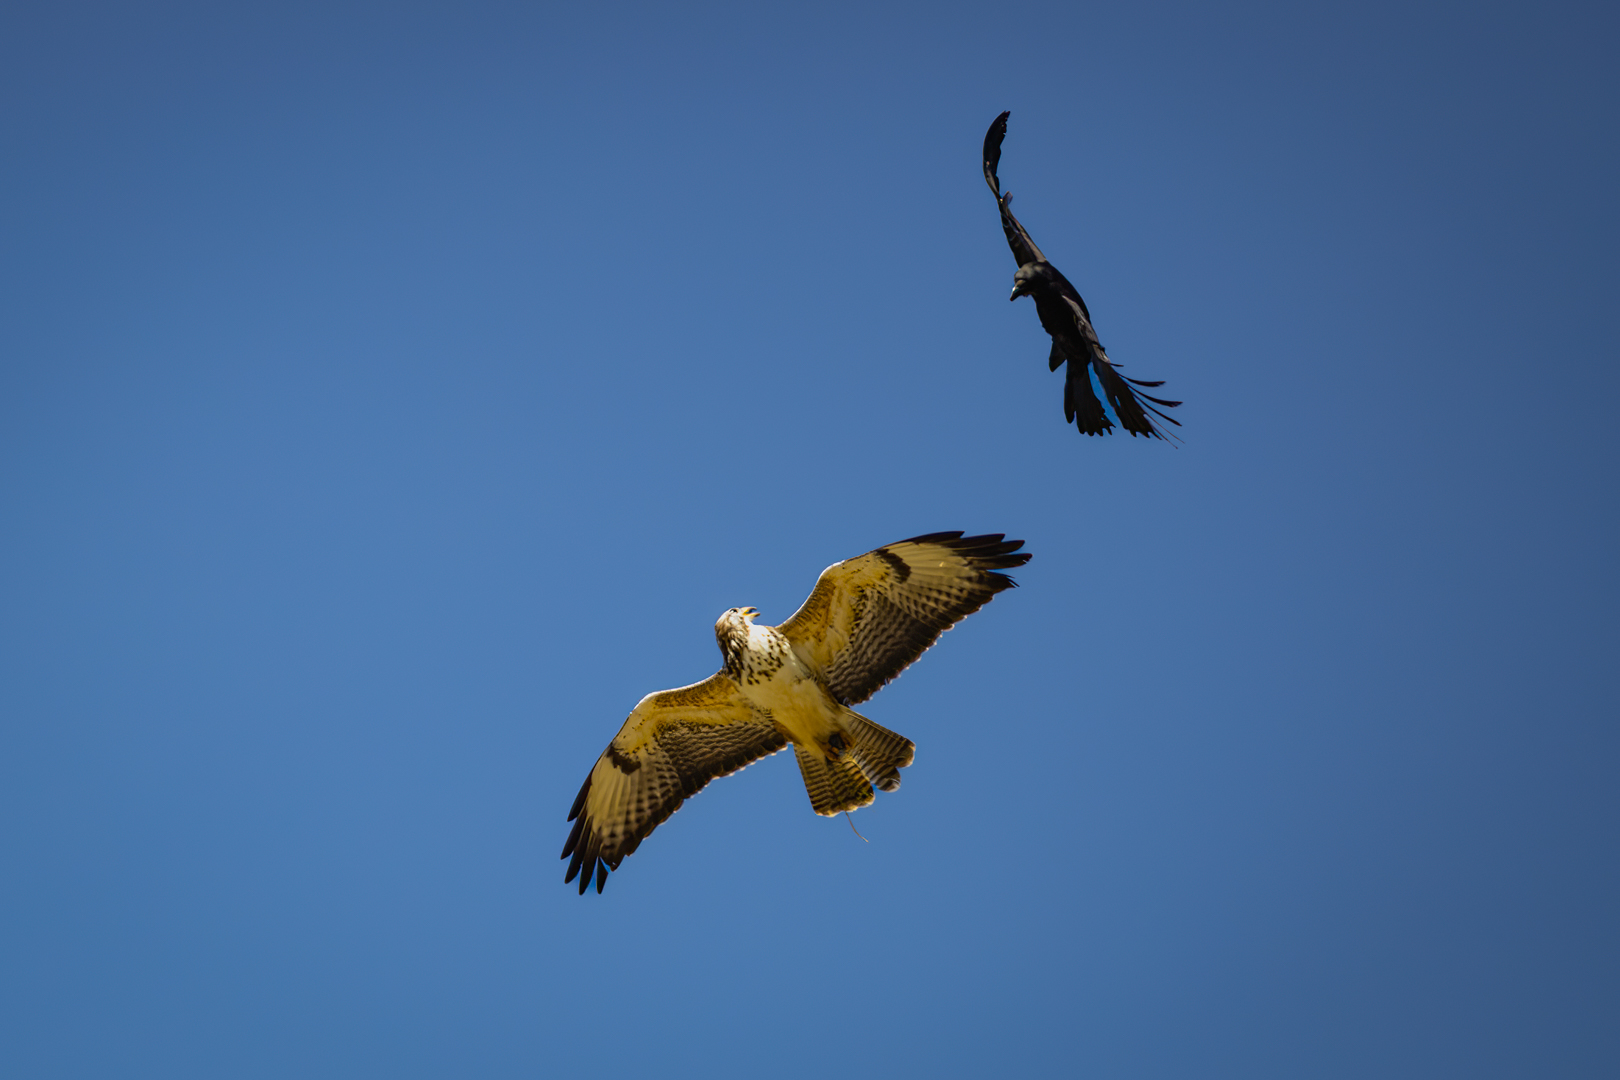 Crow attacks buzzard